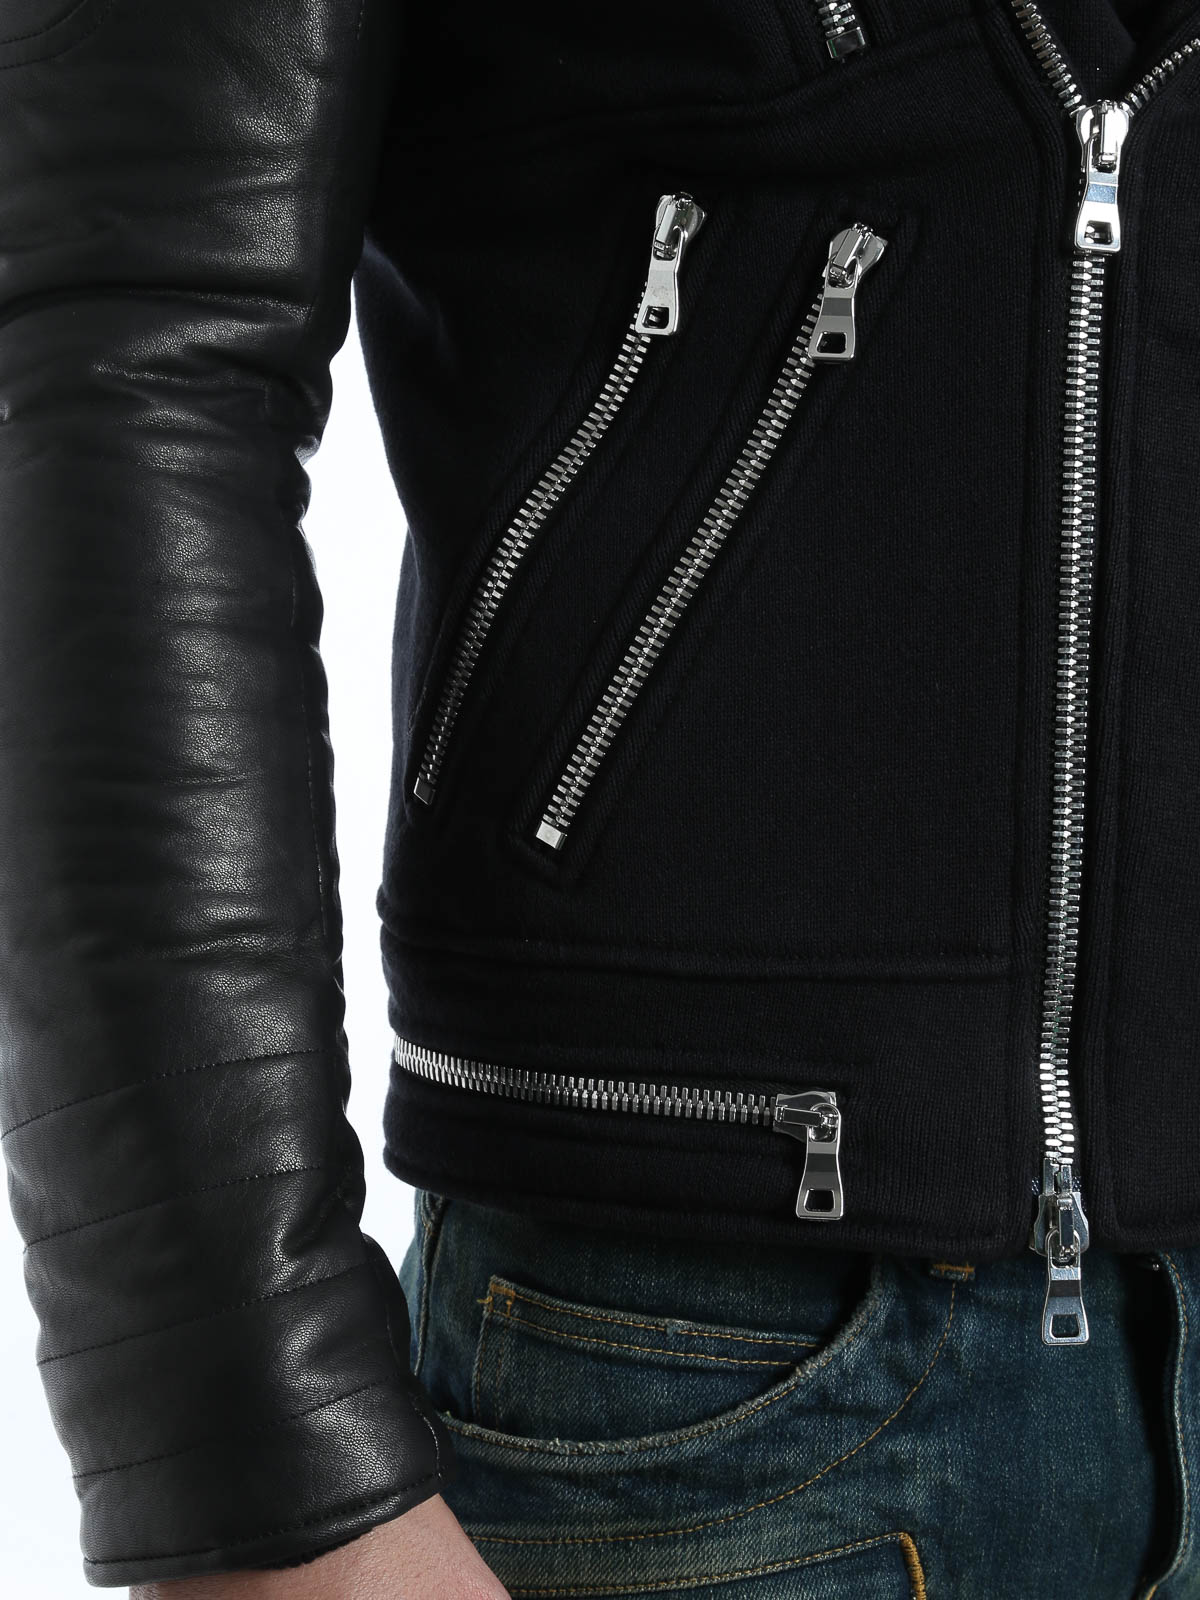 Biker jackets Balmain   Leather and cotton biker jacket